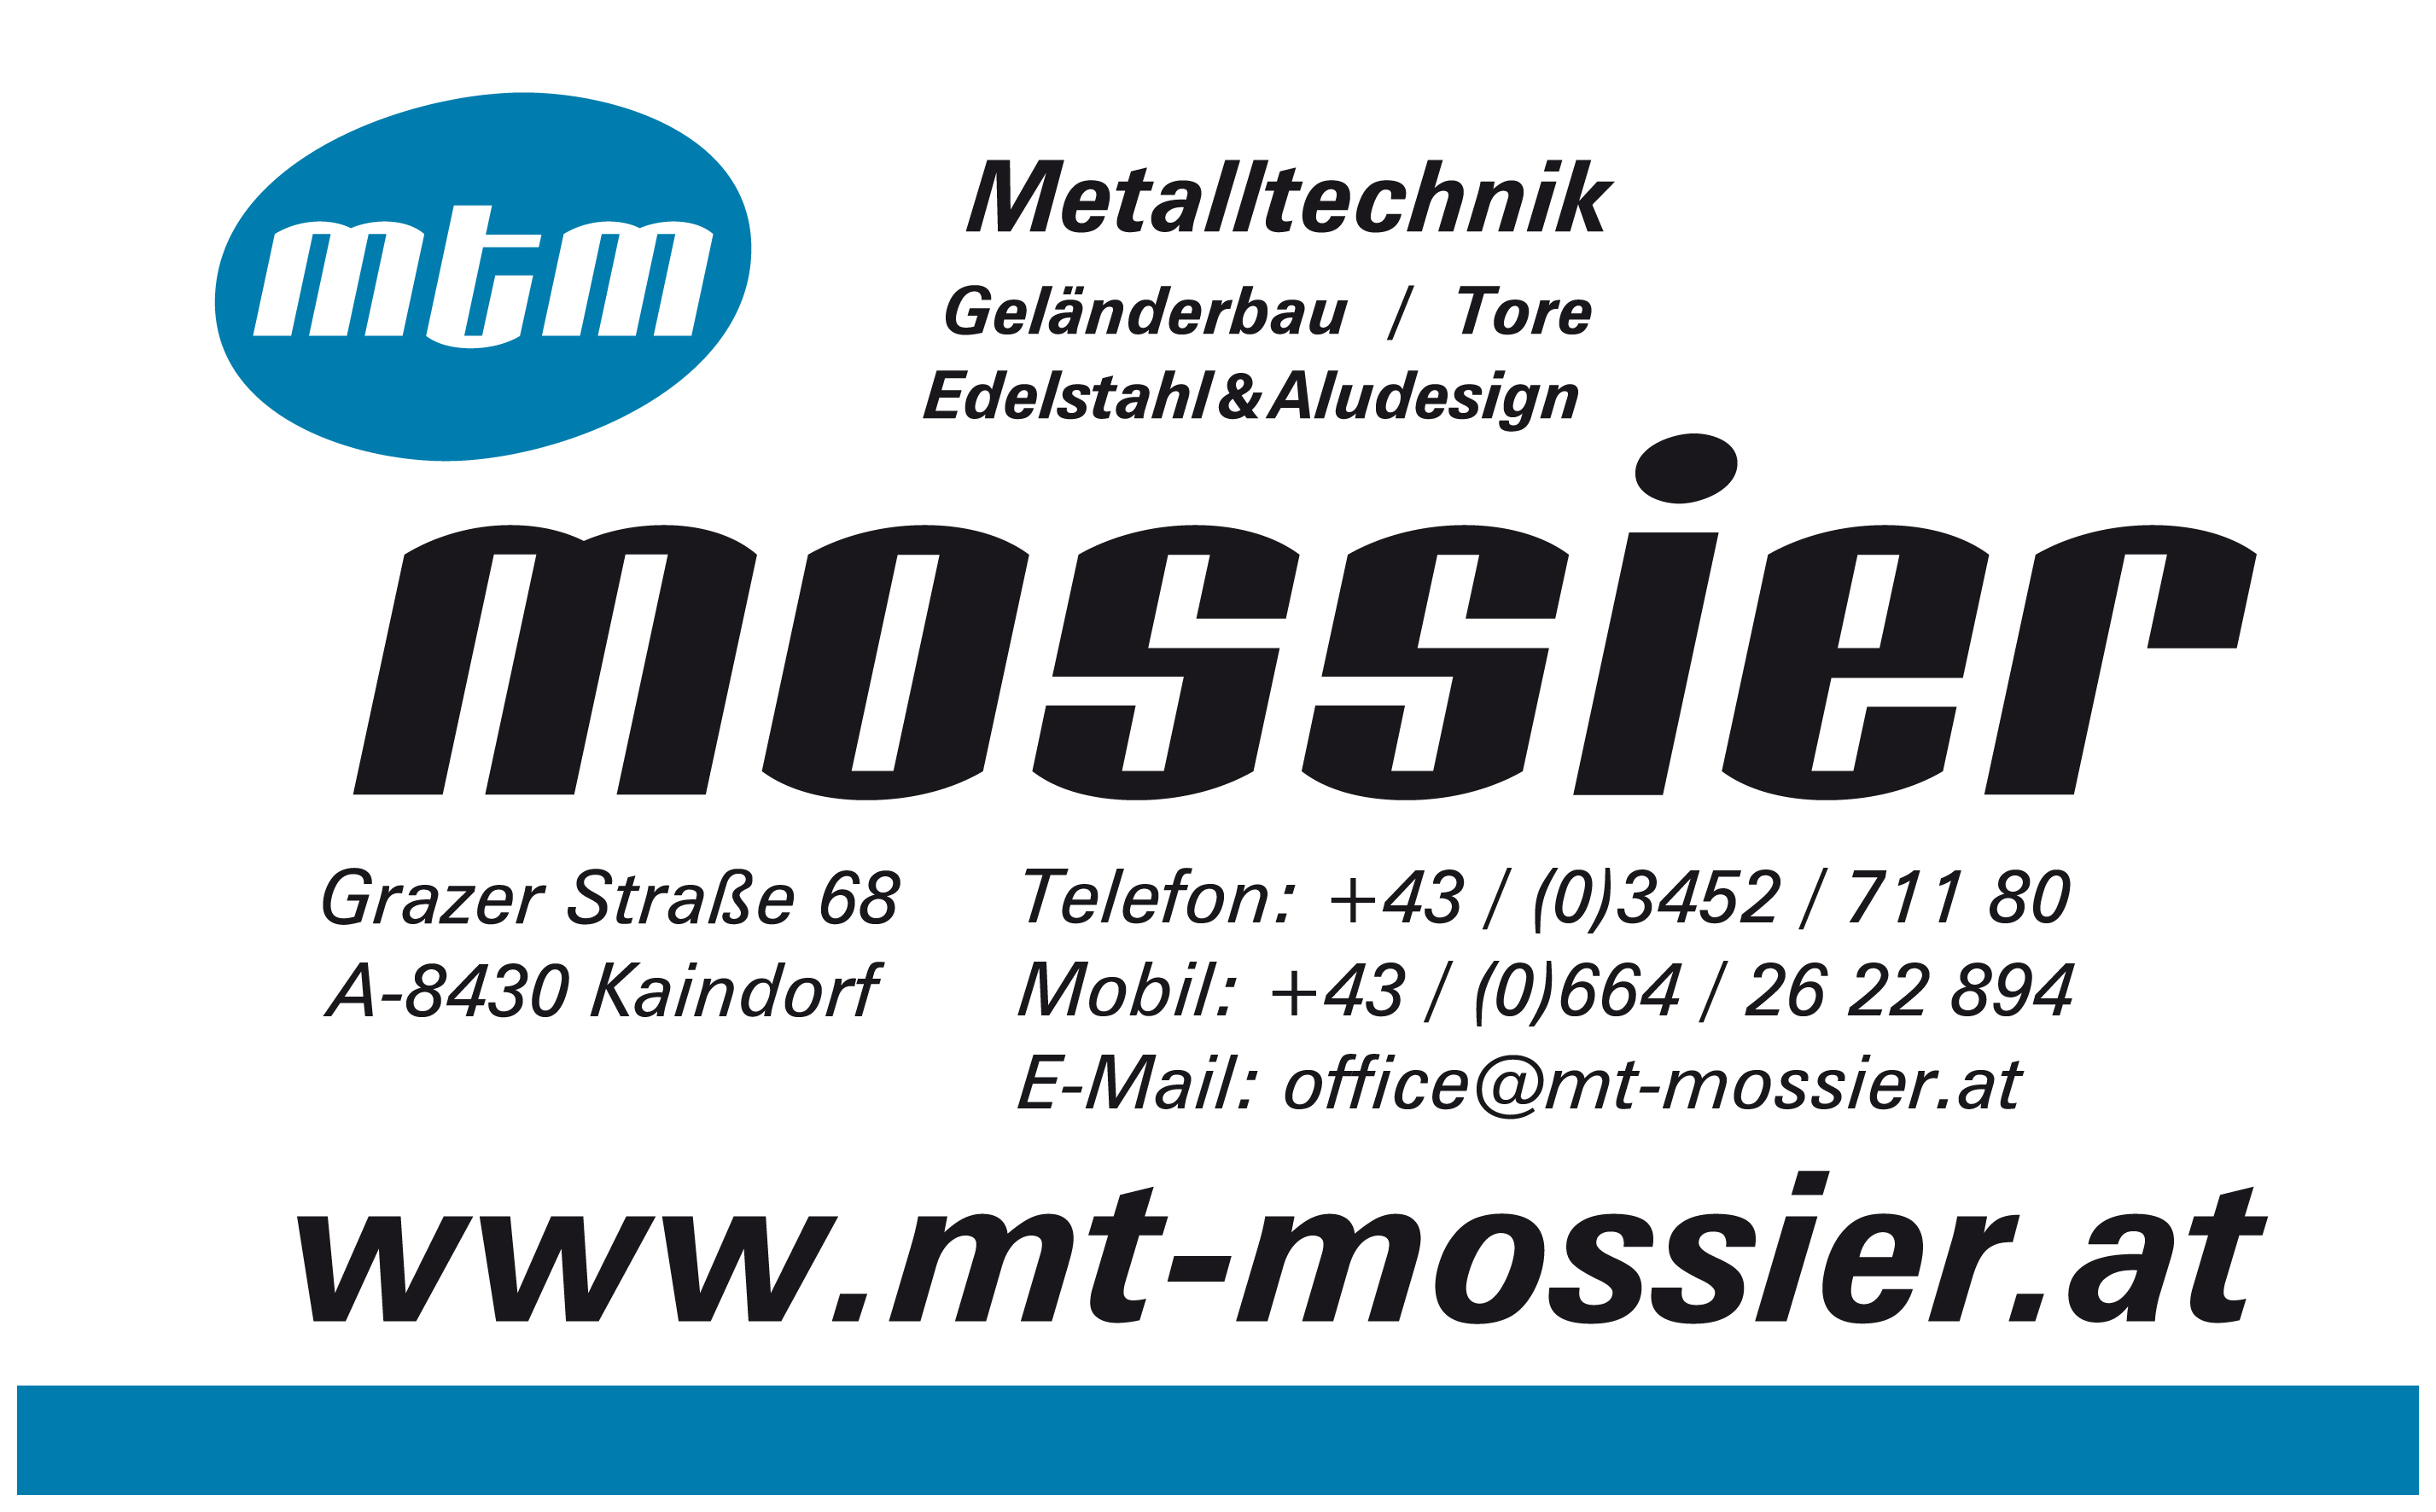 Metalltechnik Mossier